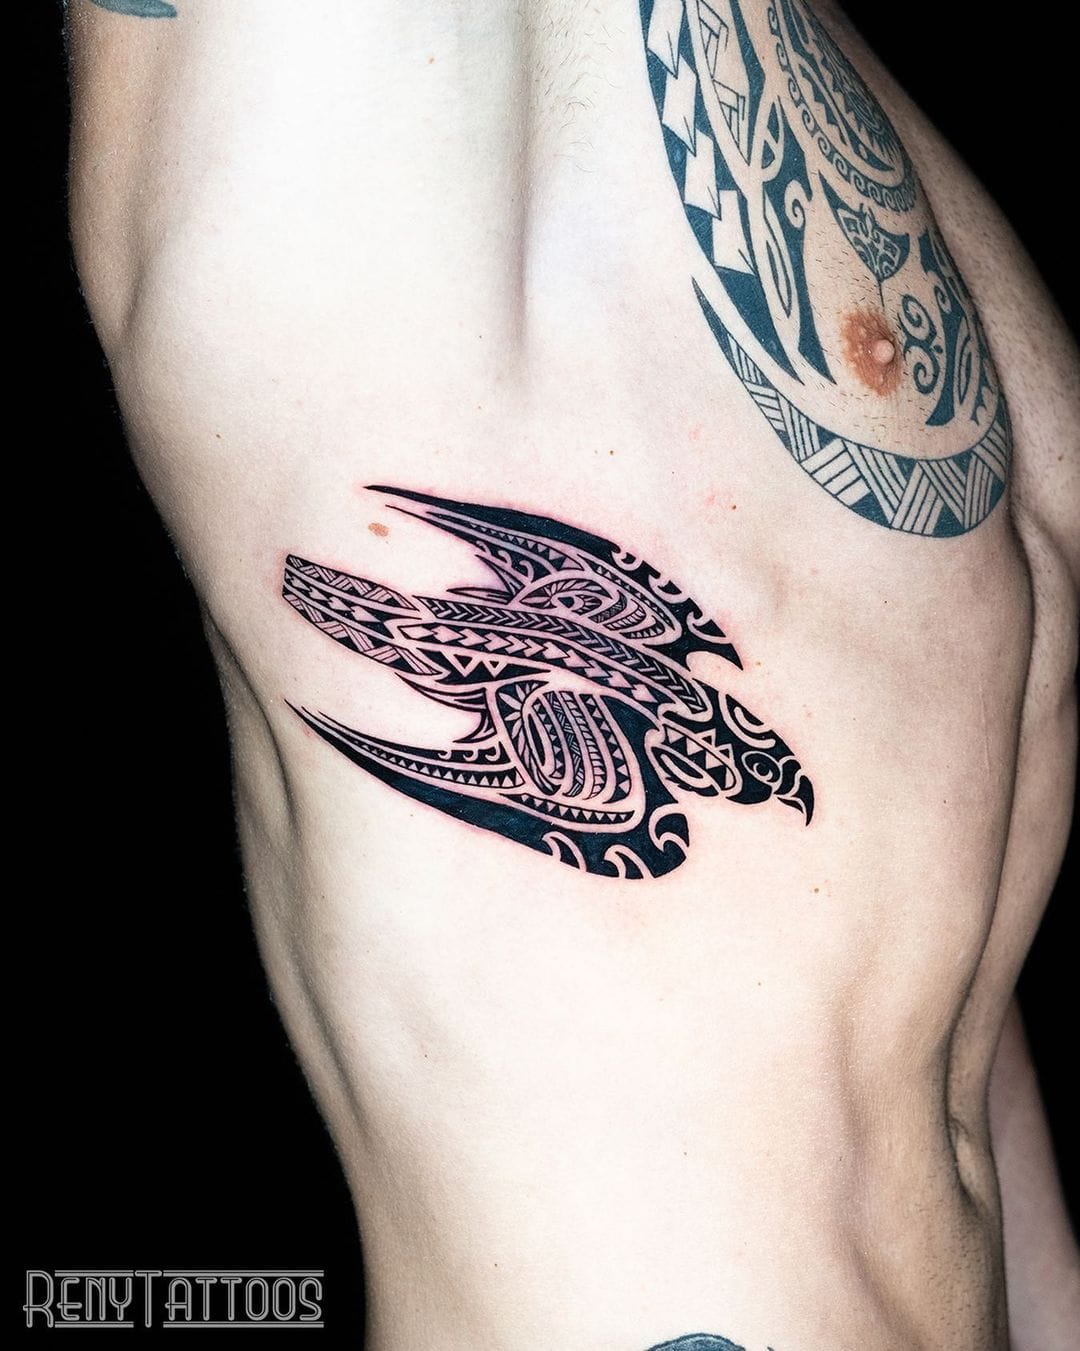 Premium Vector | Tattoo sketch maori style for leg or shoulder